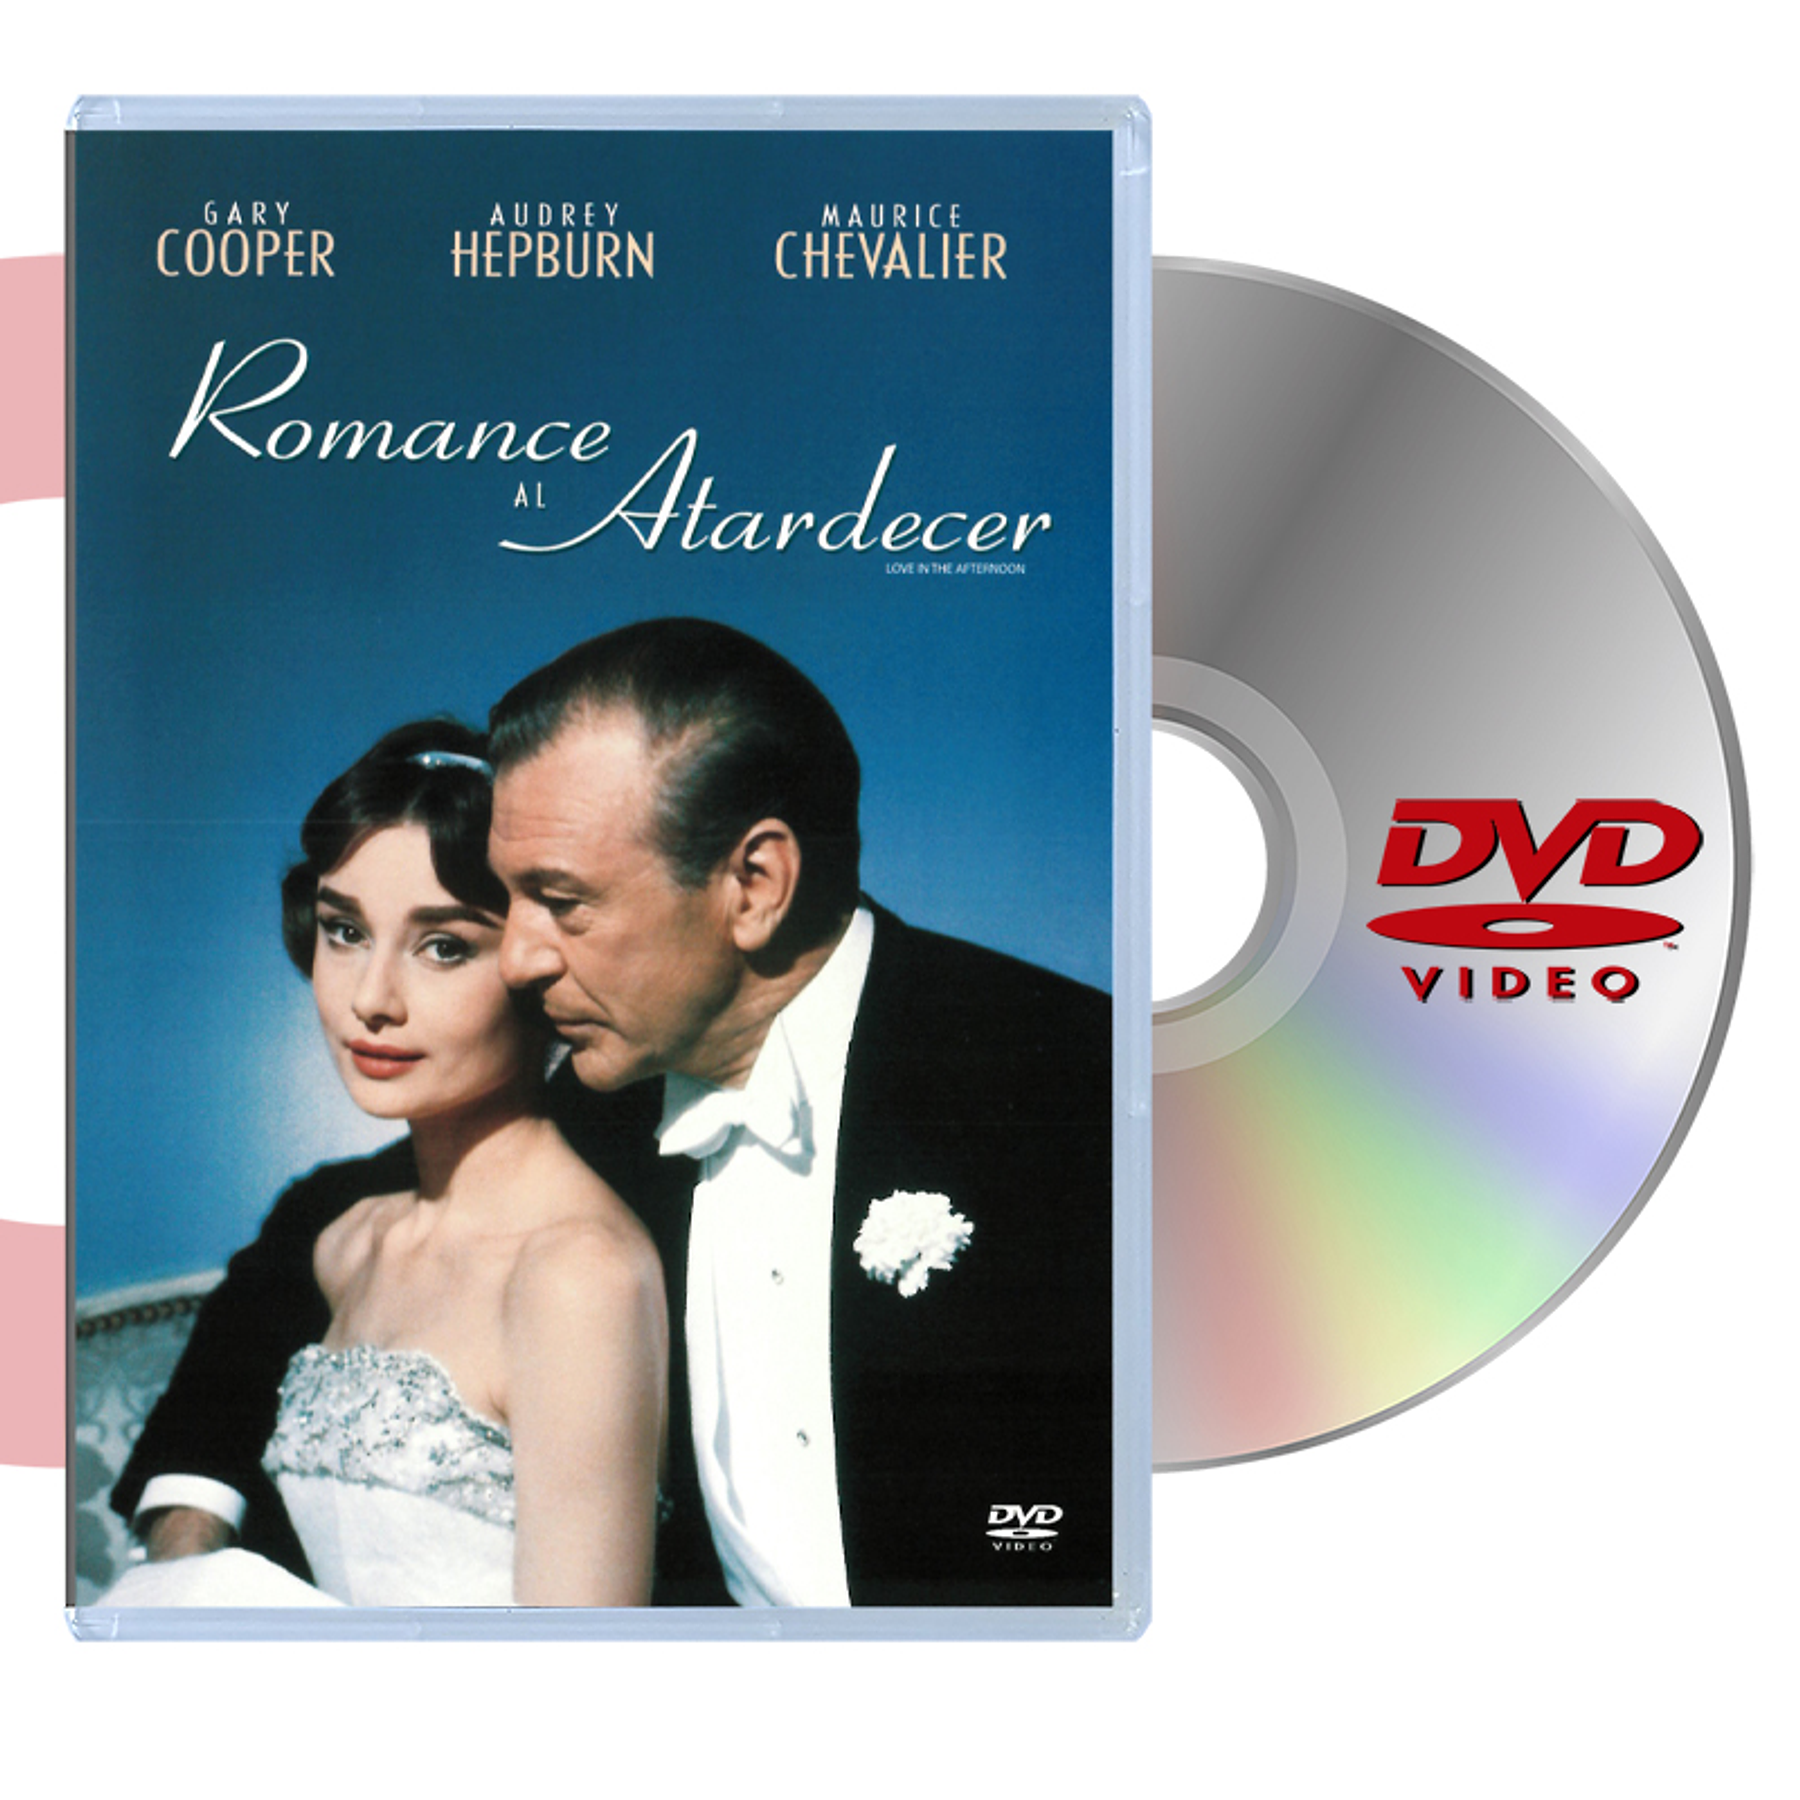 DVD ROMANCE AL ATARDECER